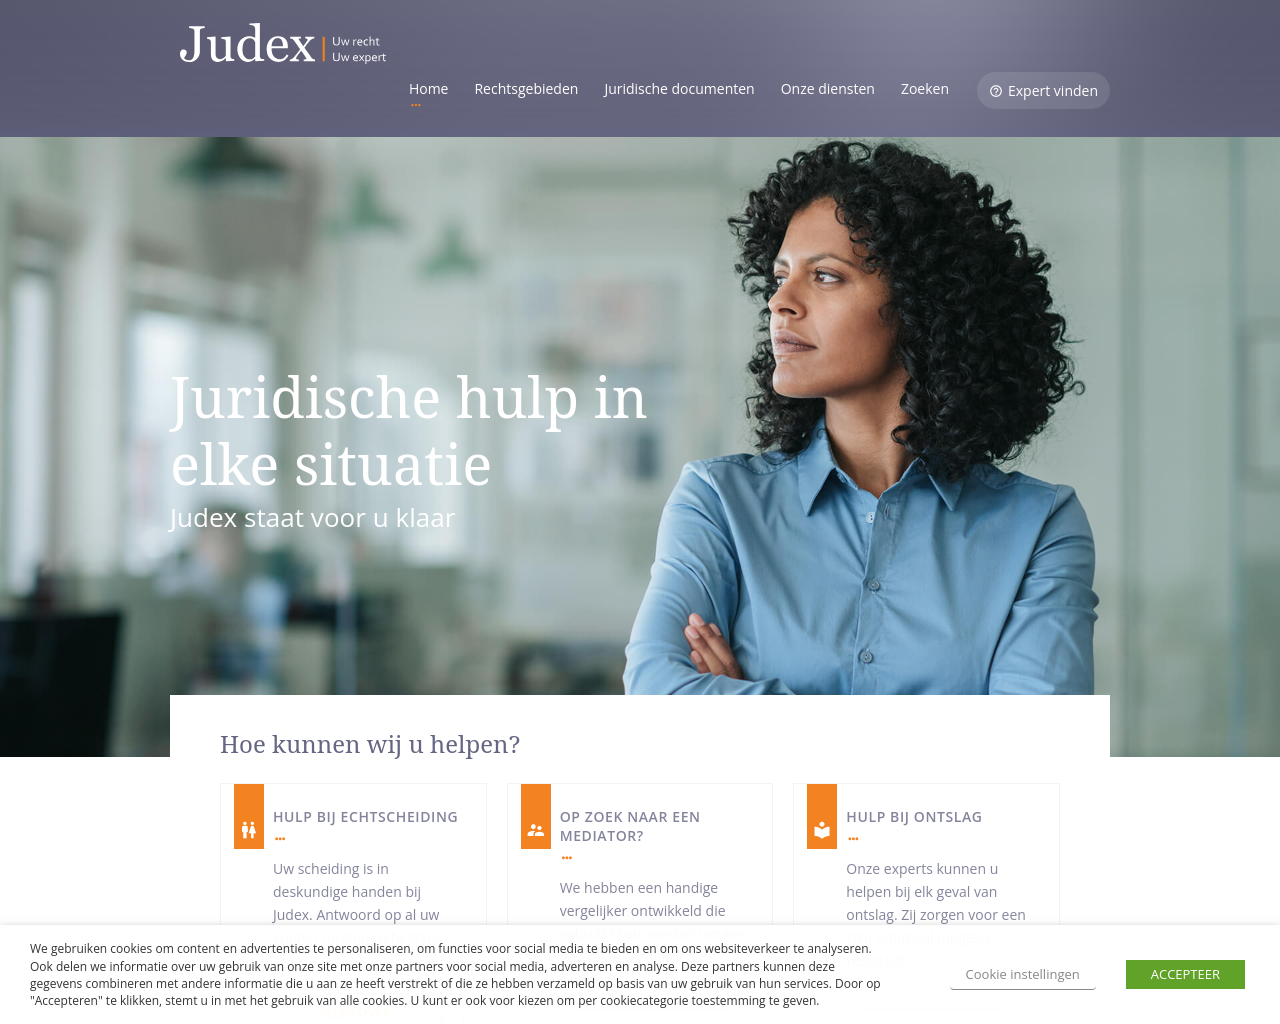 judex.nl